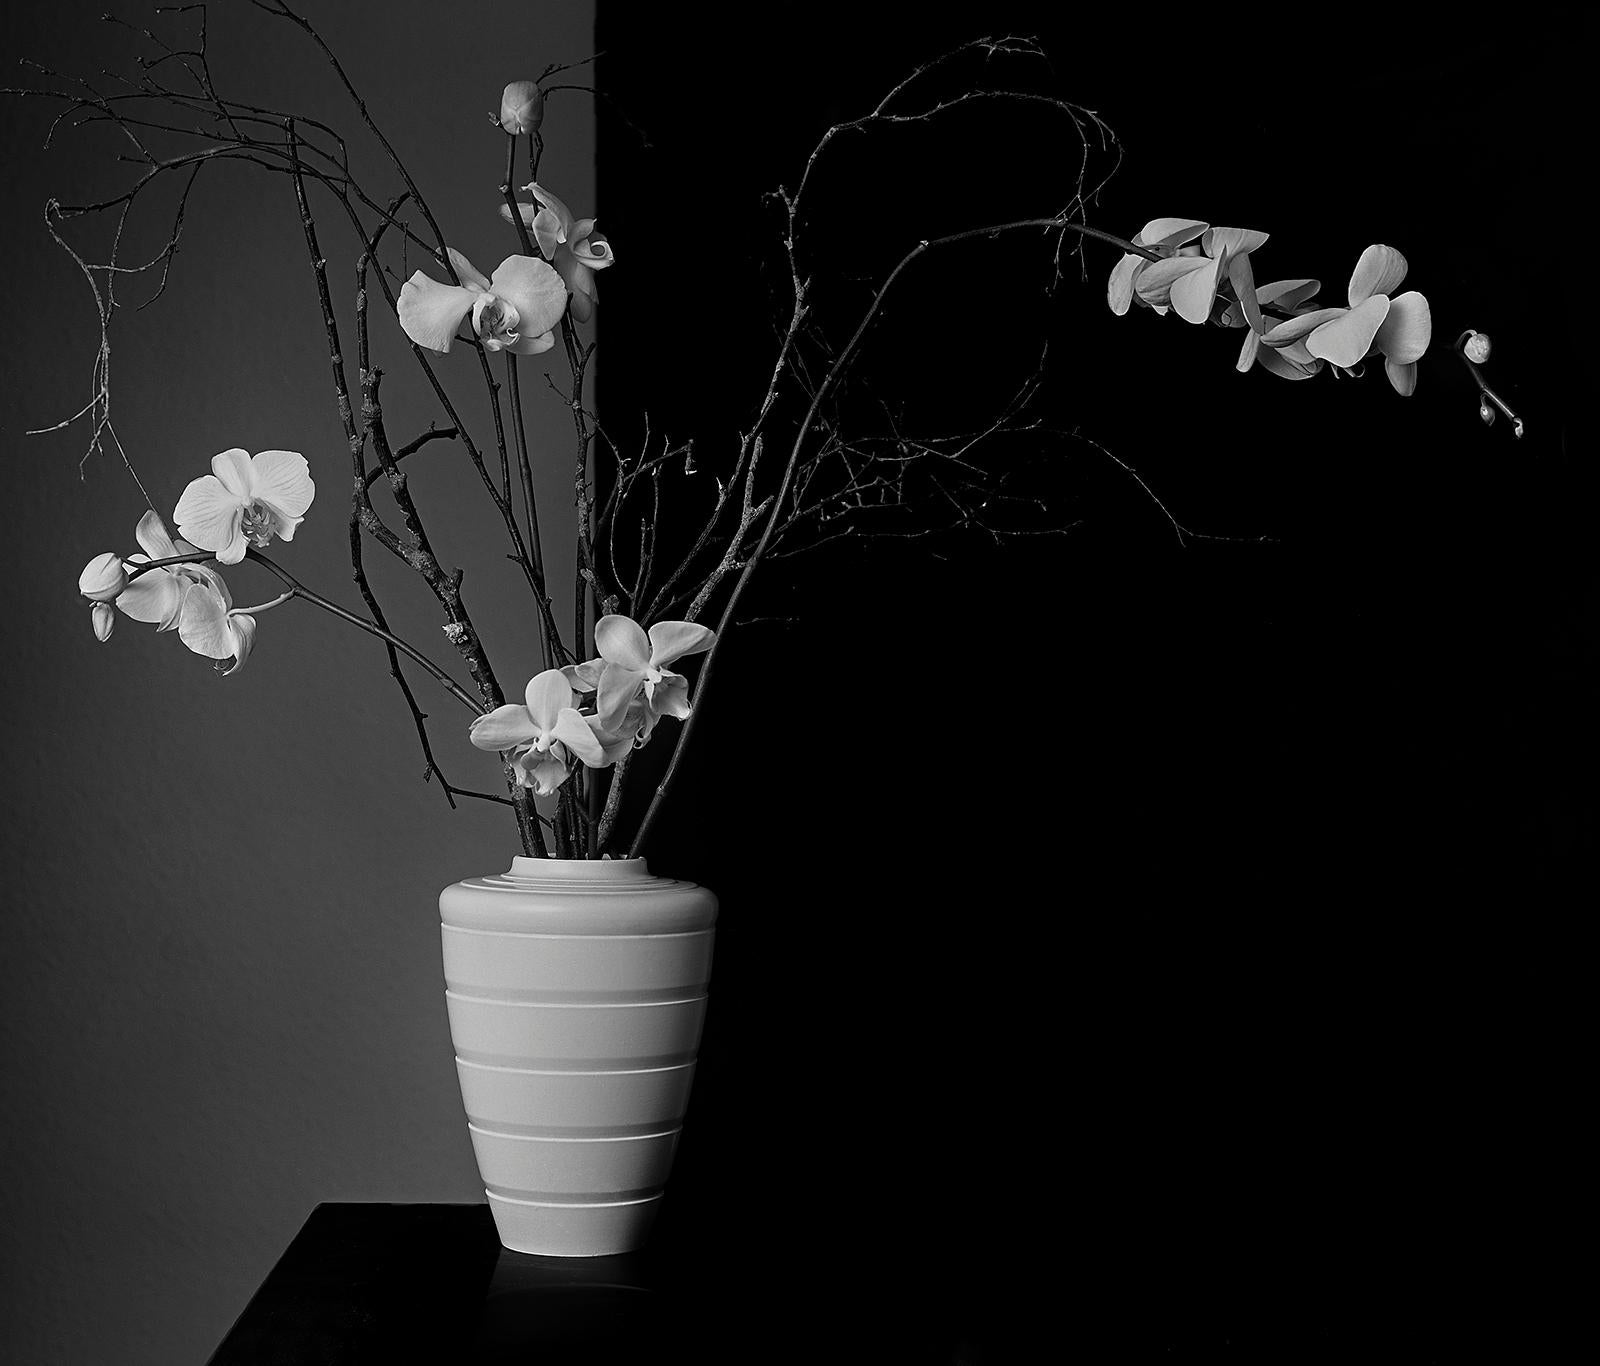 Ian Sanderson Still-Life Photograph - Orchids-Signed limited edition stilllife print, Black white nature photo, Romantic